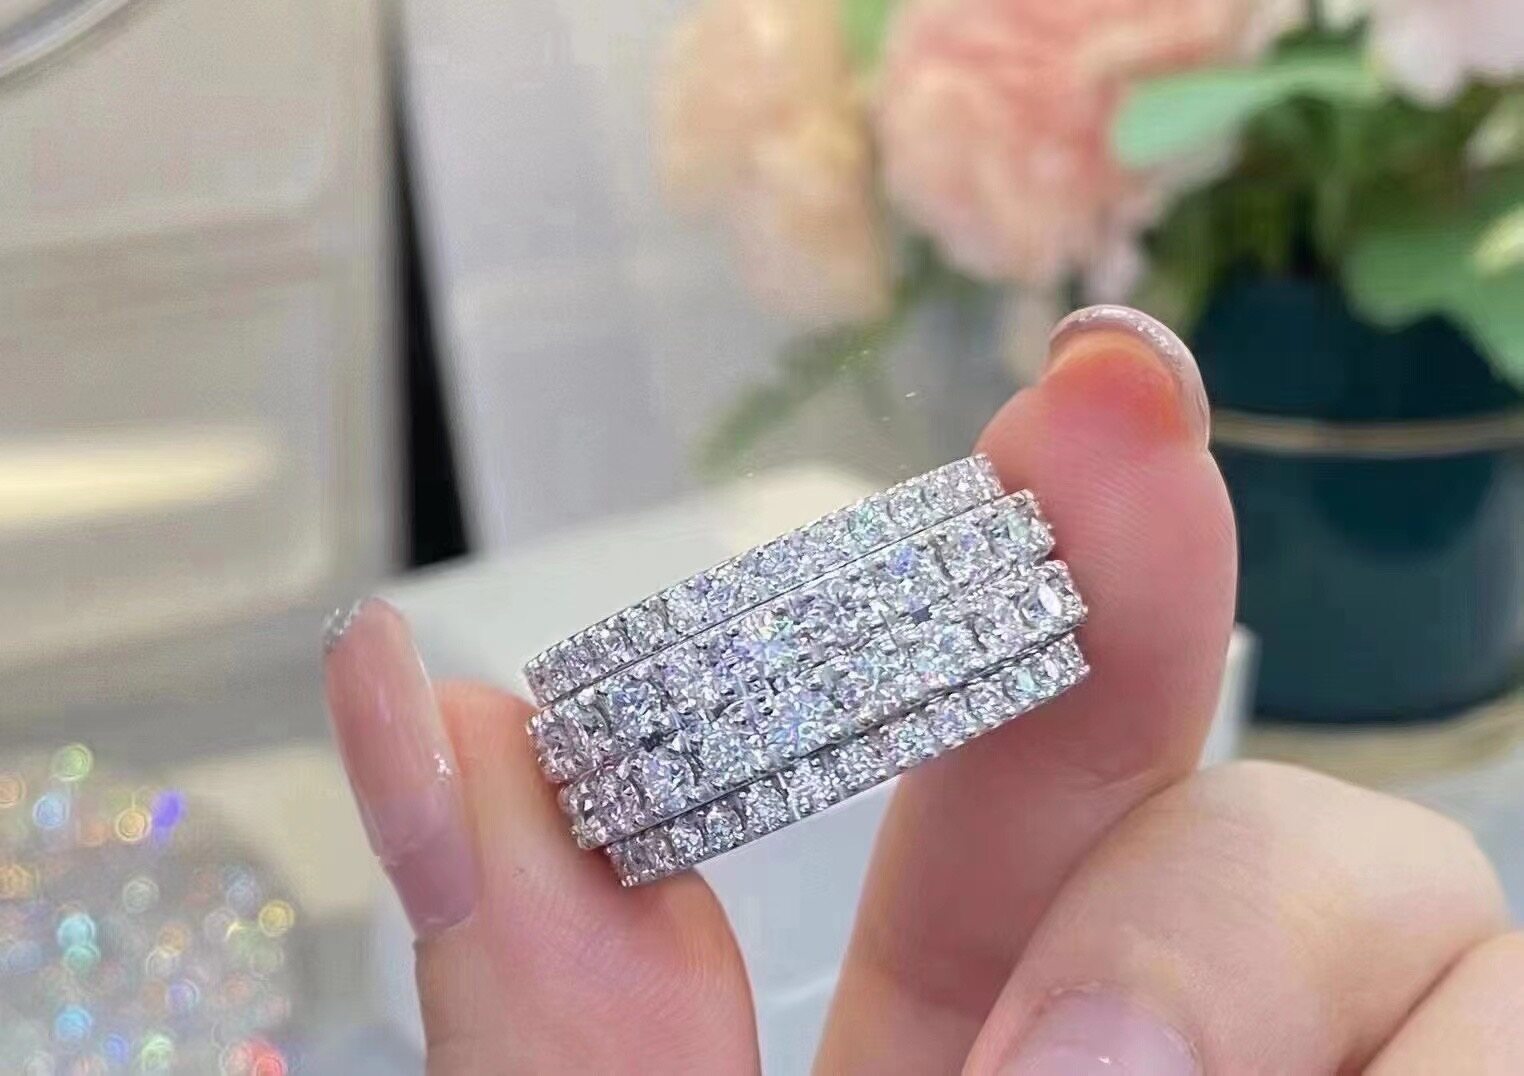 18k diamond ring